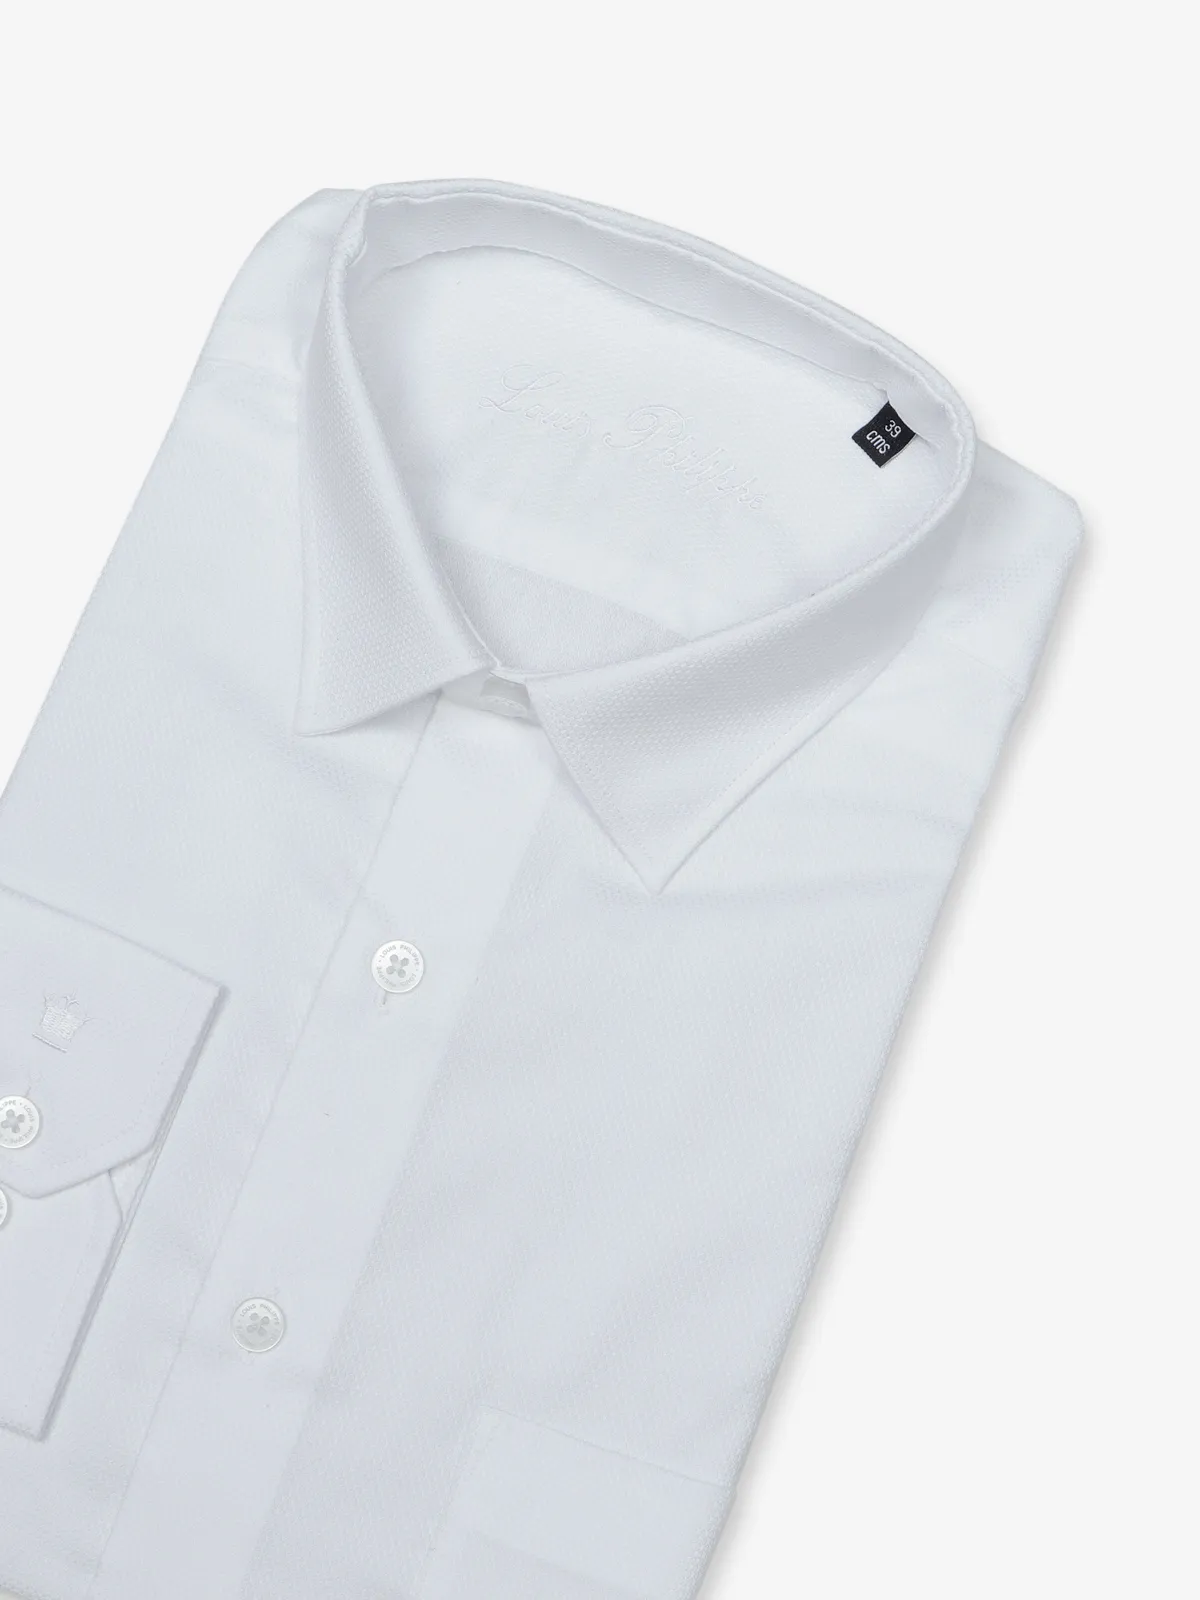 Louis Philippe white texture cotton shirt